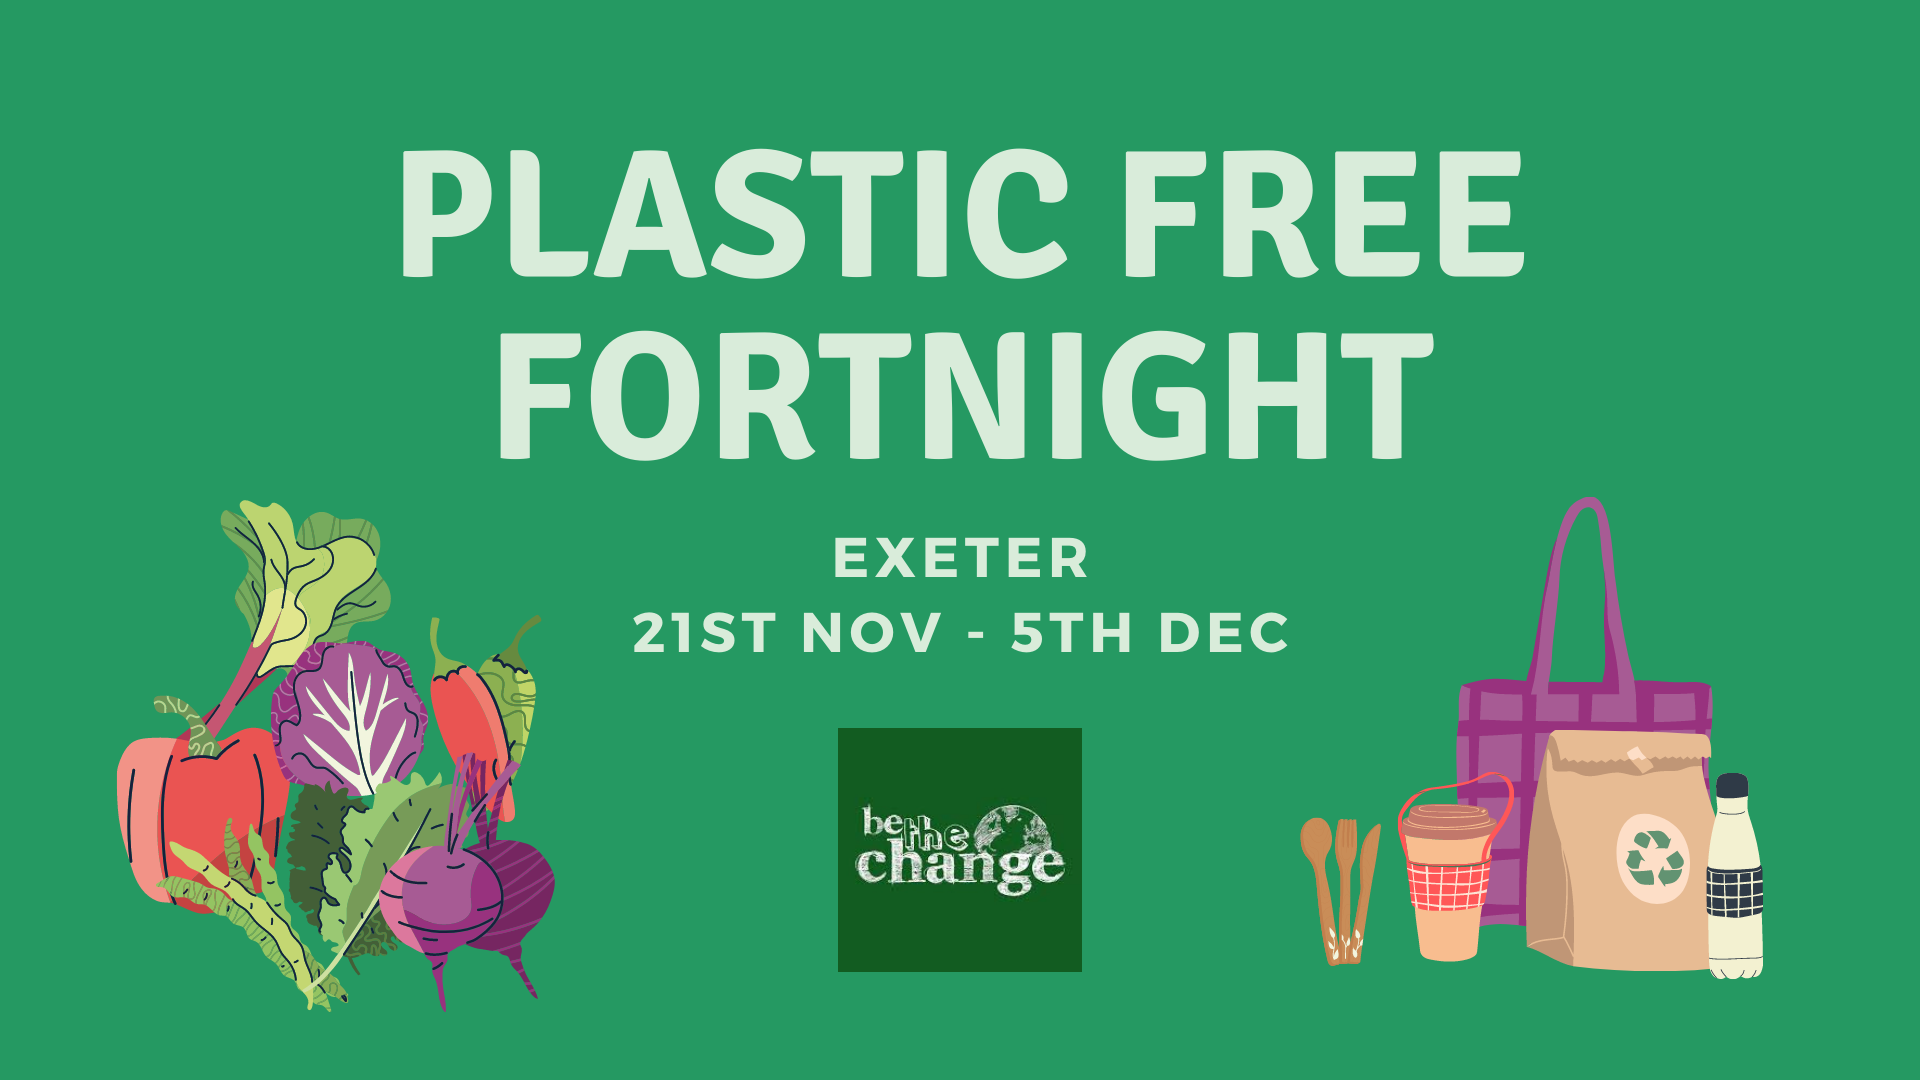 Plastic Free Fortnight, Exeter 21st Nov - 5th Dec